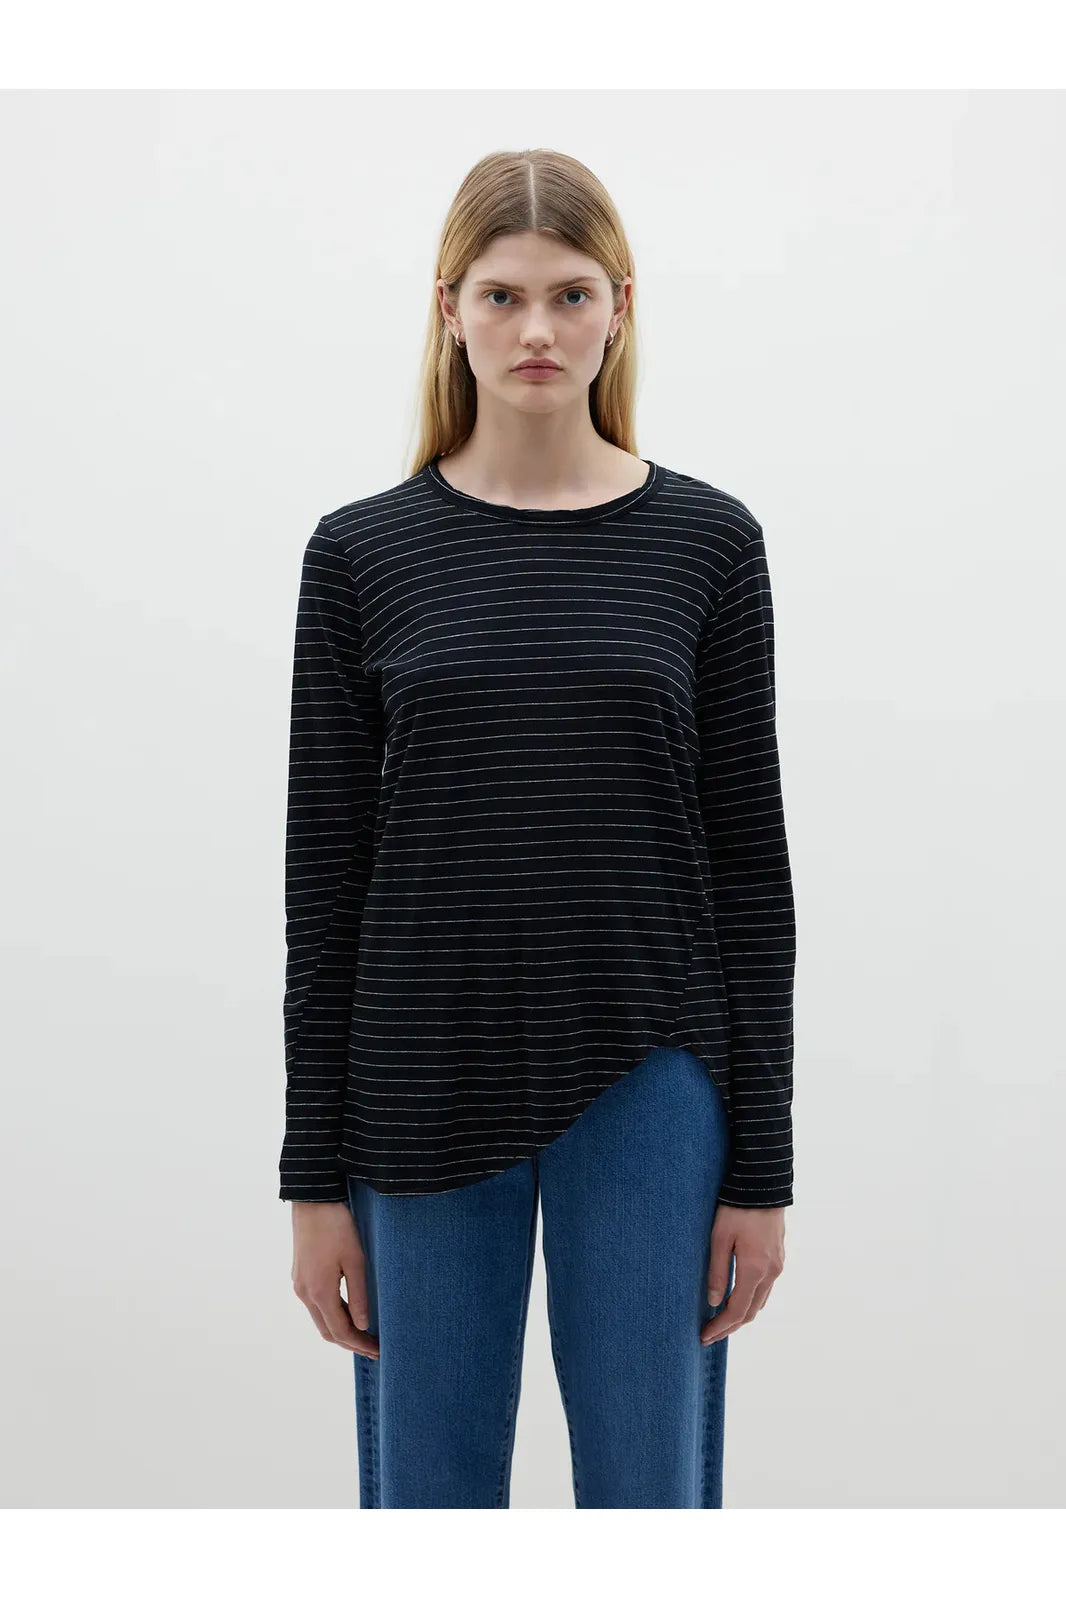 Stripe Scoop Hem Long Sleeve T-shirt in Black / White by Bassike